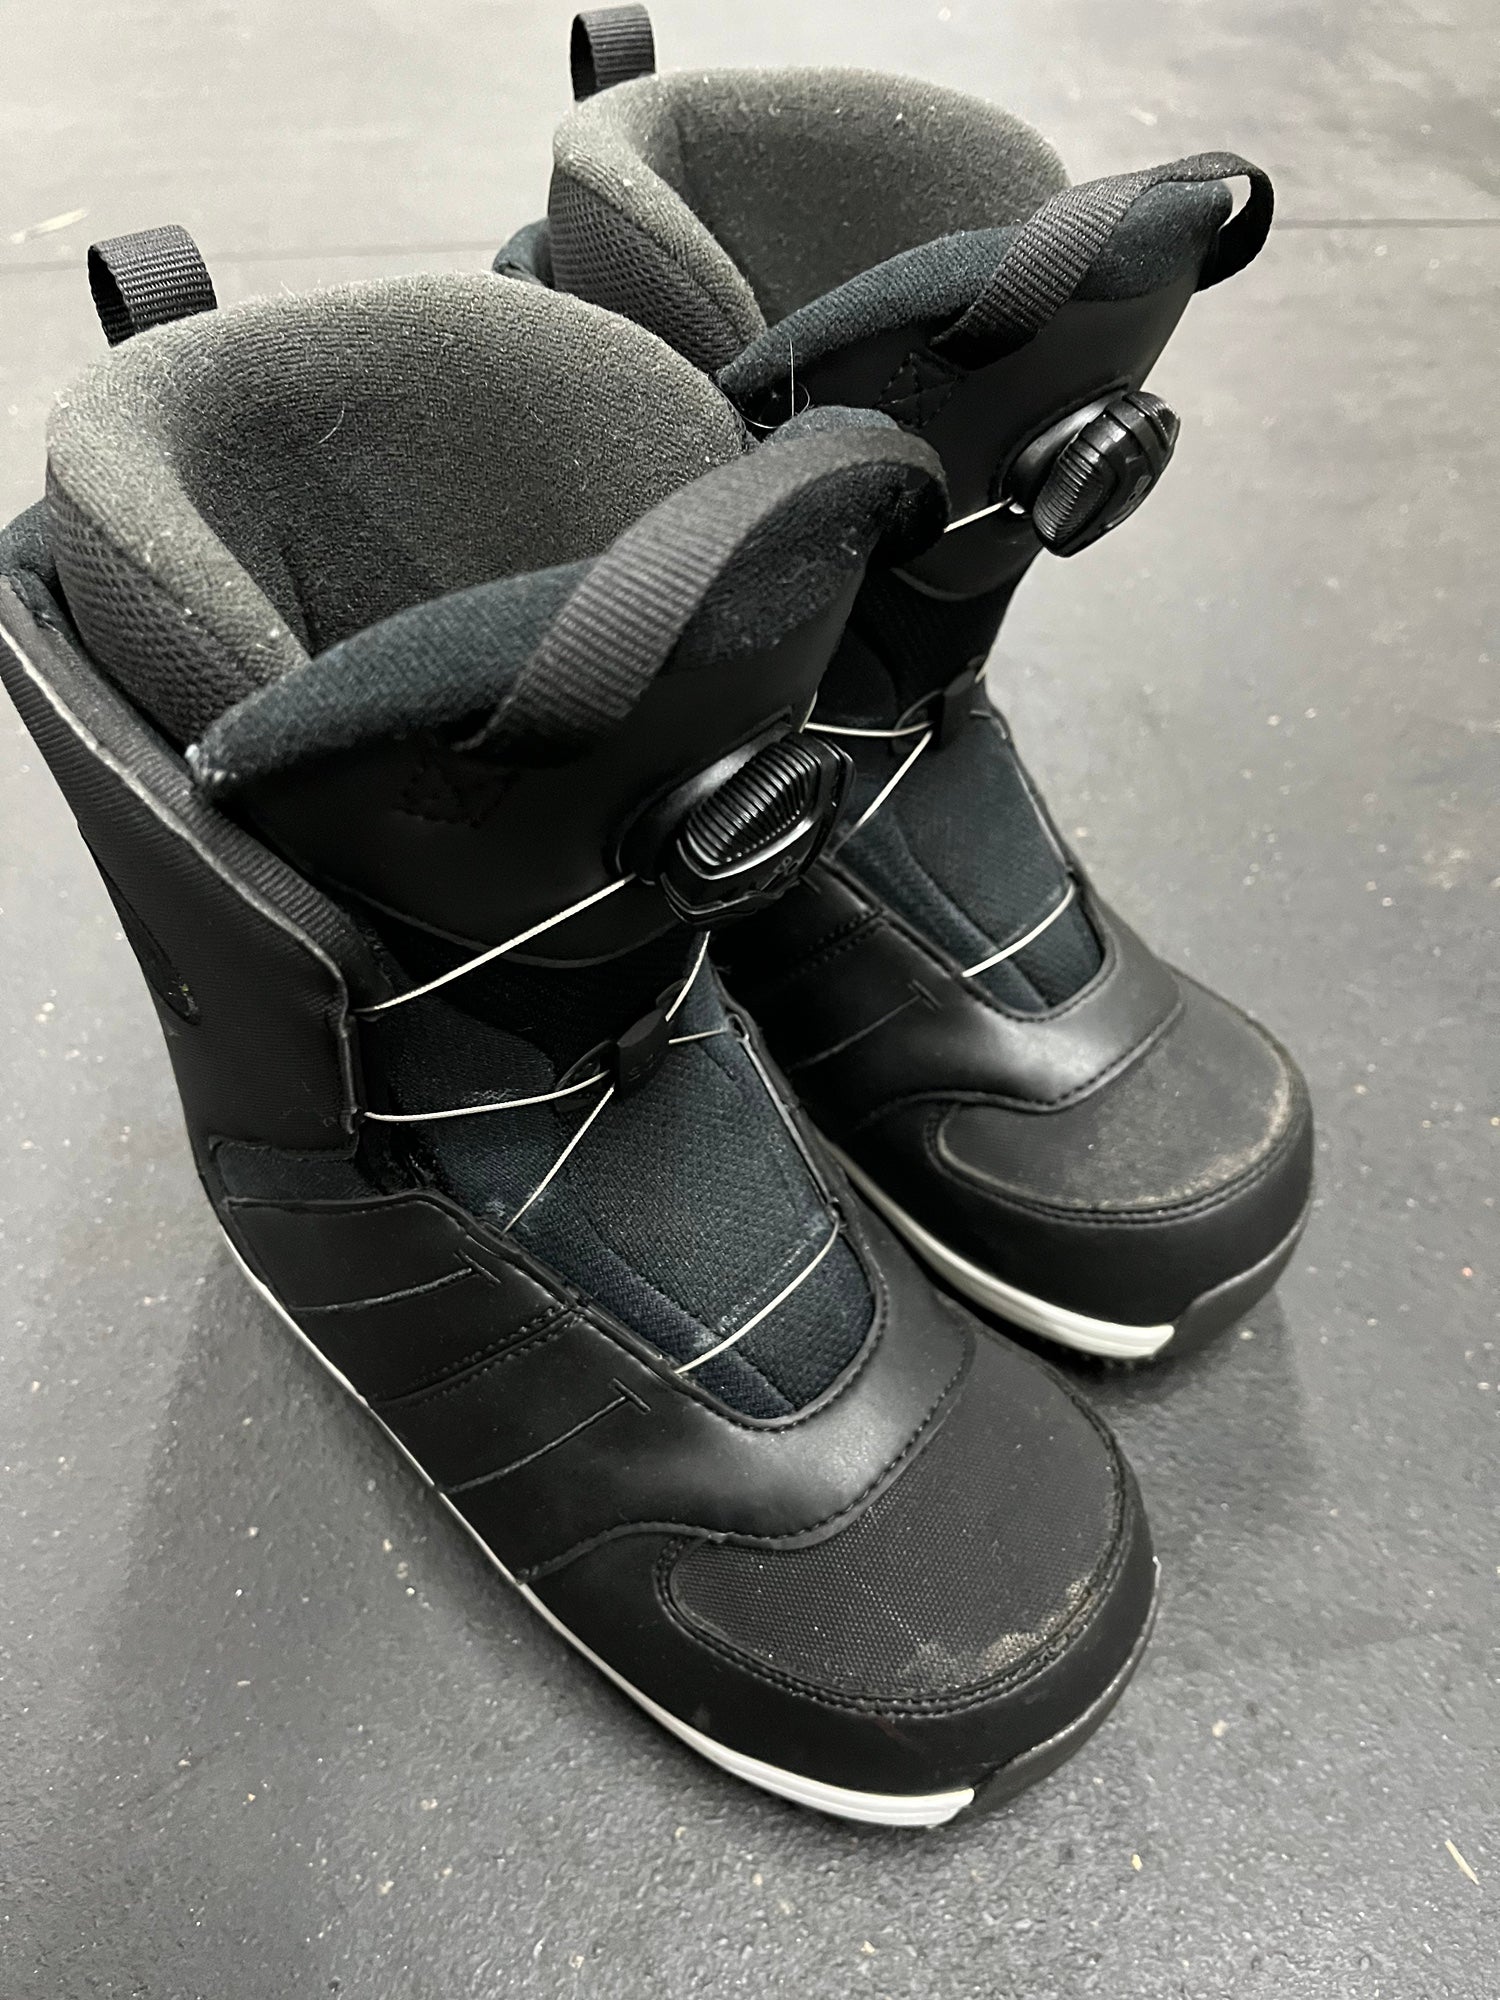 Salomon Launch Boa Jr Snowboard Boots Size 5.5 | SidelineSwap